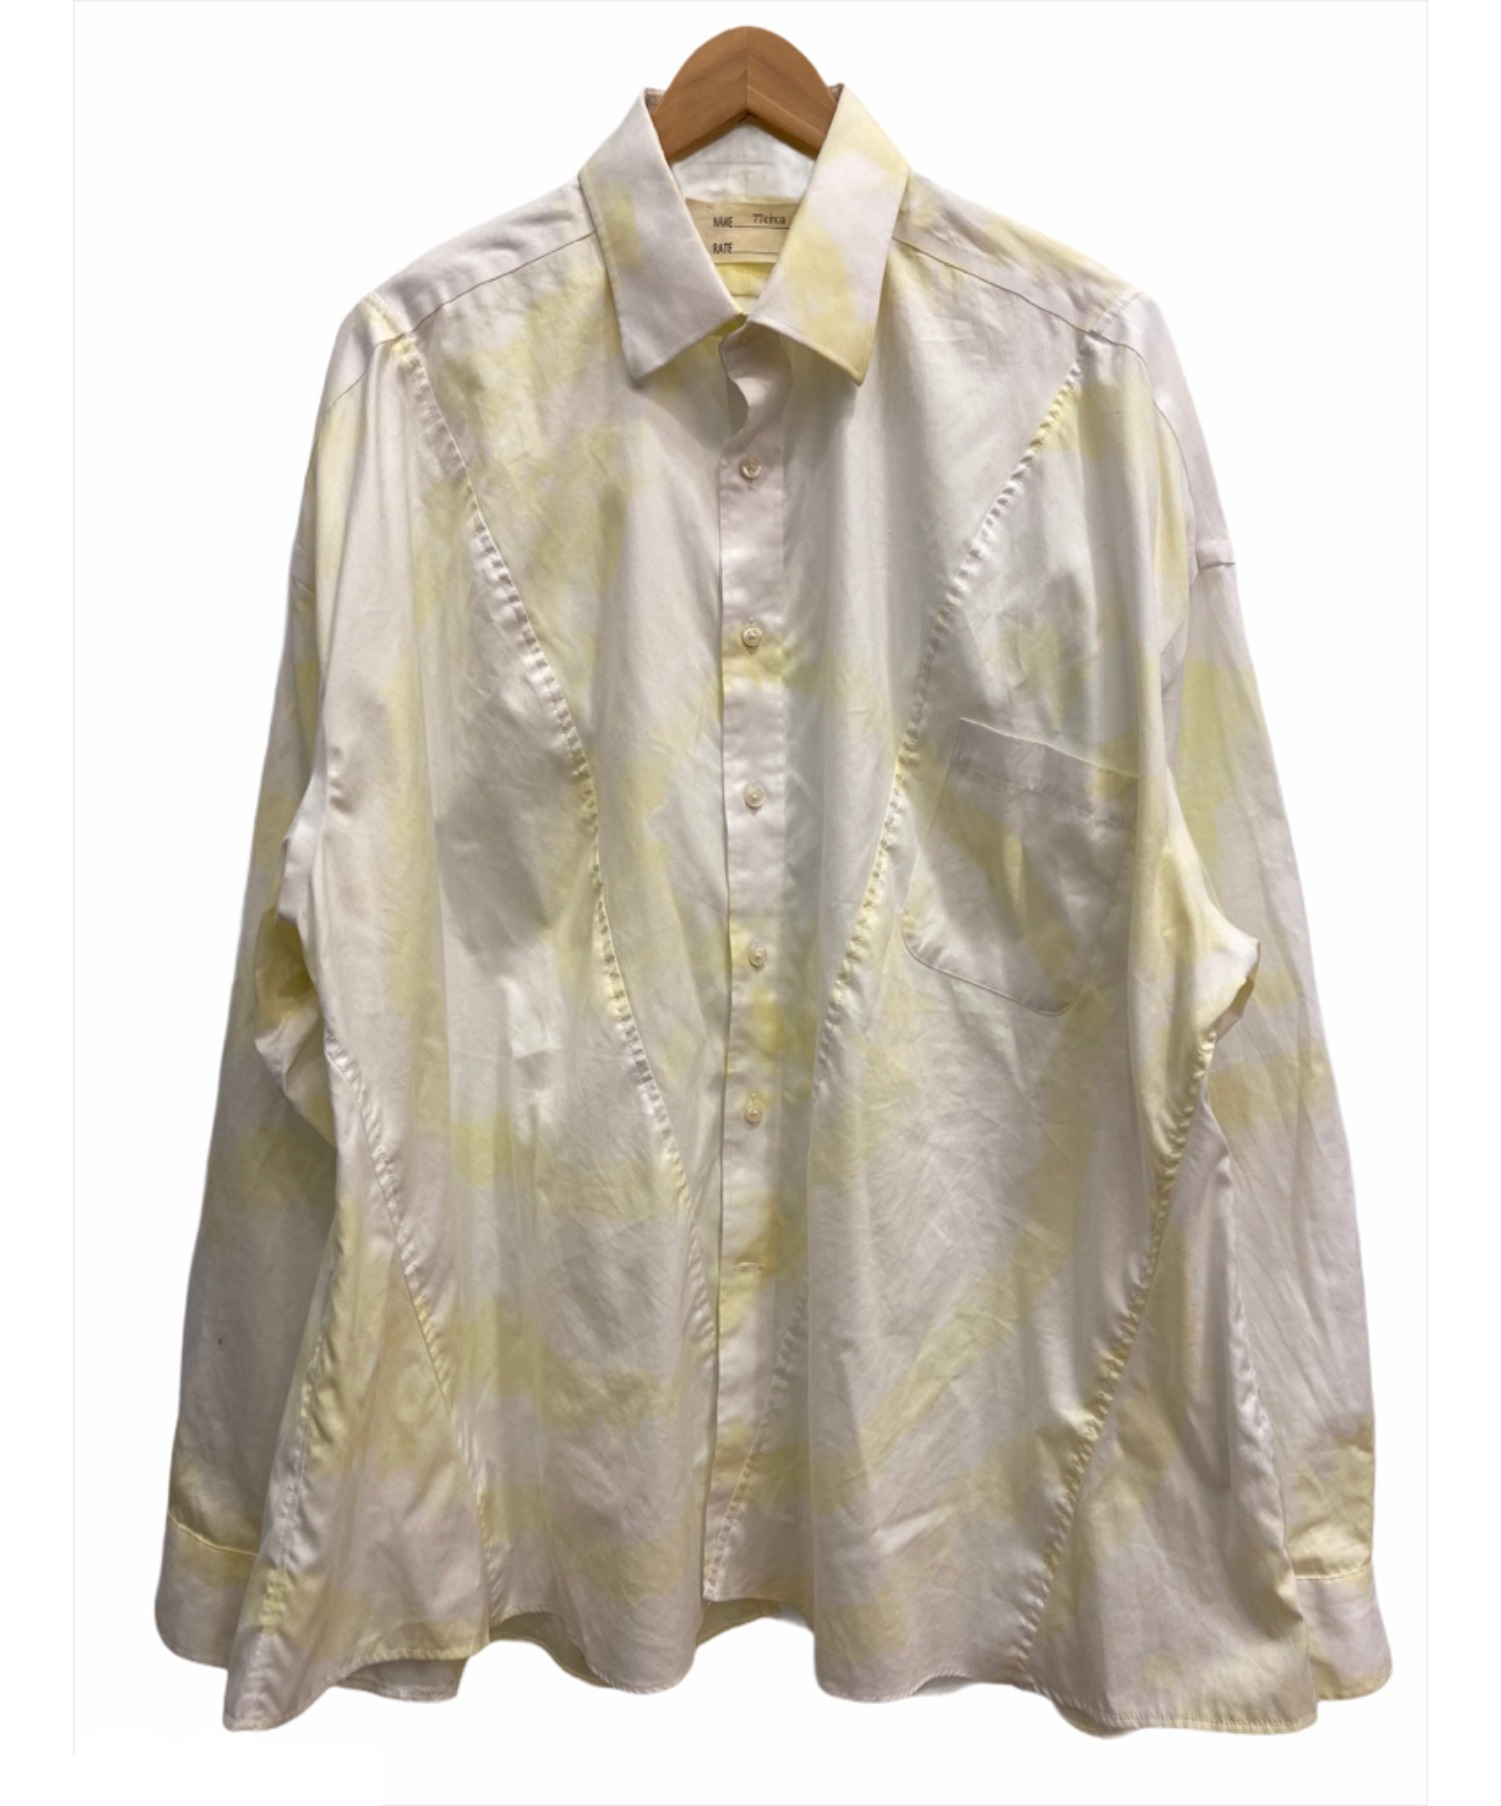 77circa (ナナナナサーカ) リメイクコットンシャツ ホワイト×イエロー サイズ:※表記なし